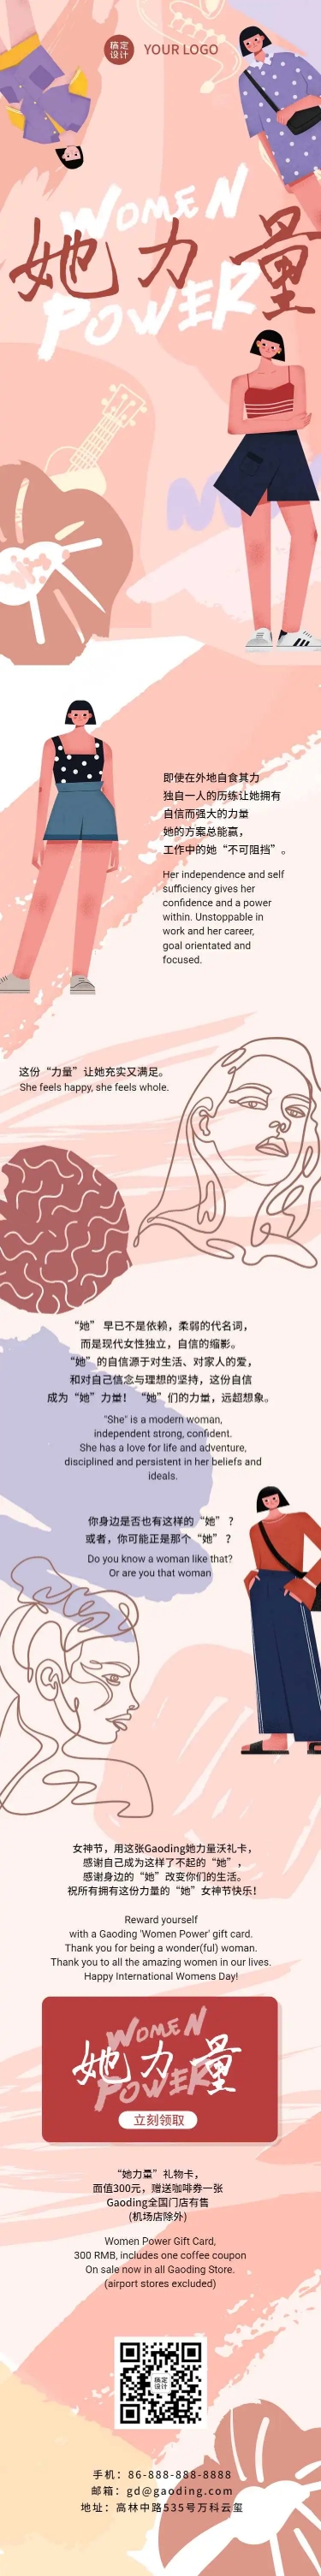 H5长页国际妇女节价值传递女性力量